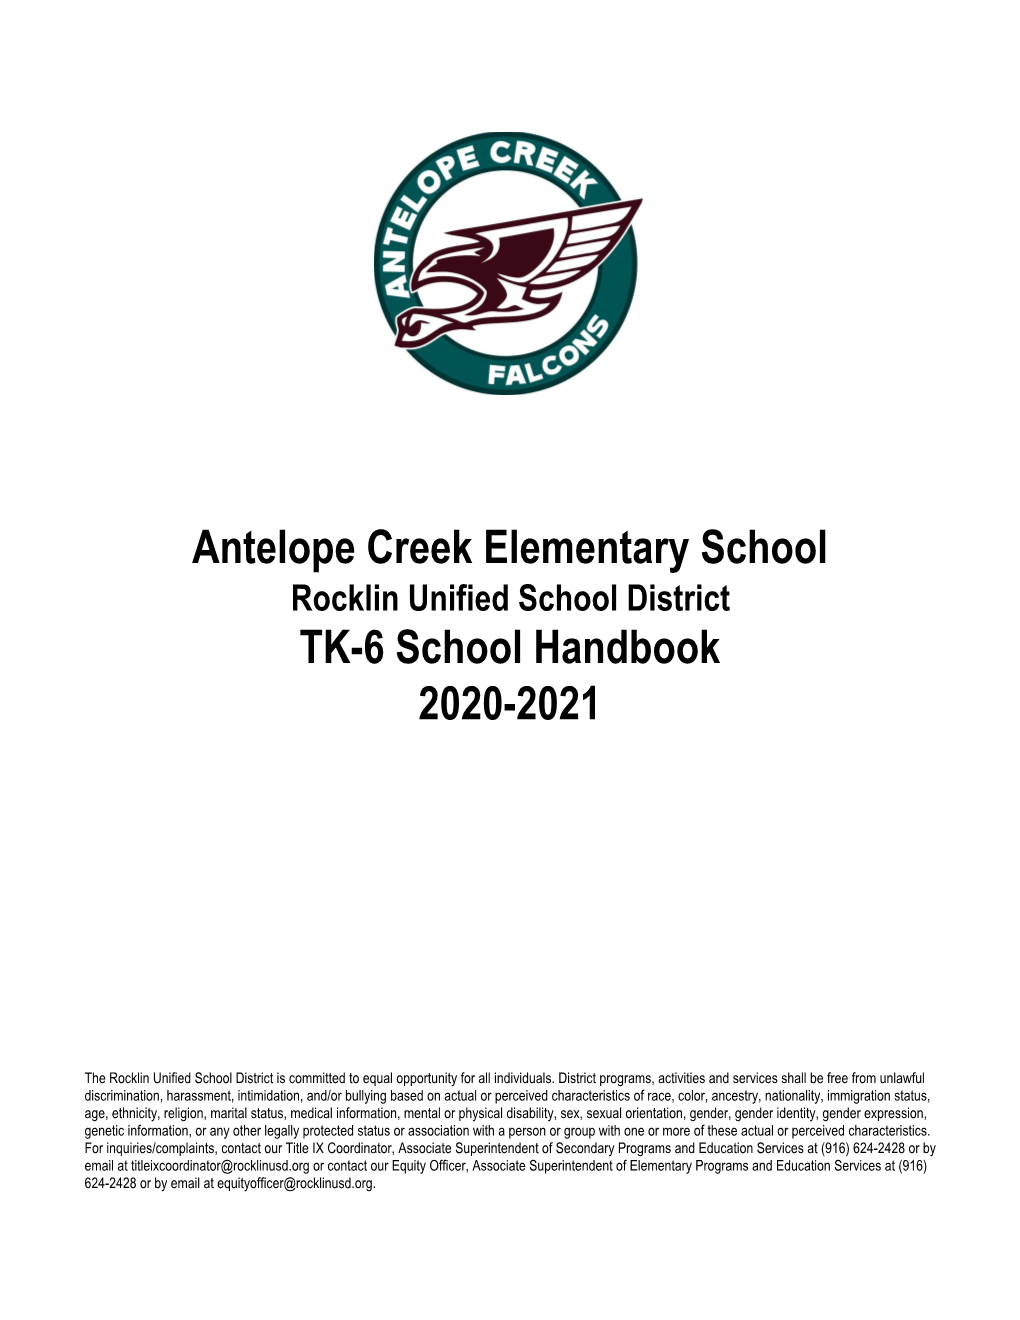 TK-6 School Handbook 2020-2021